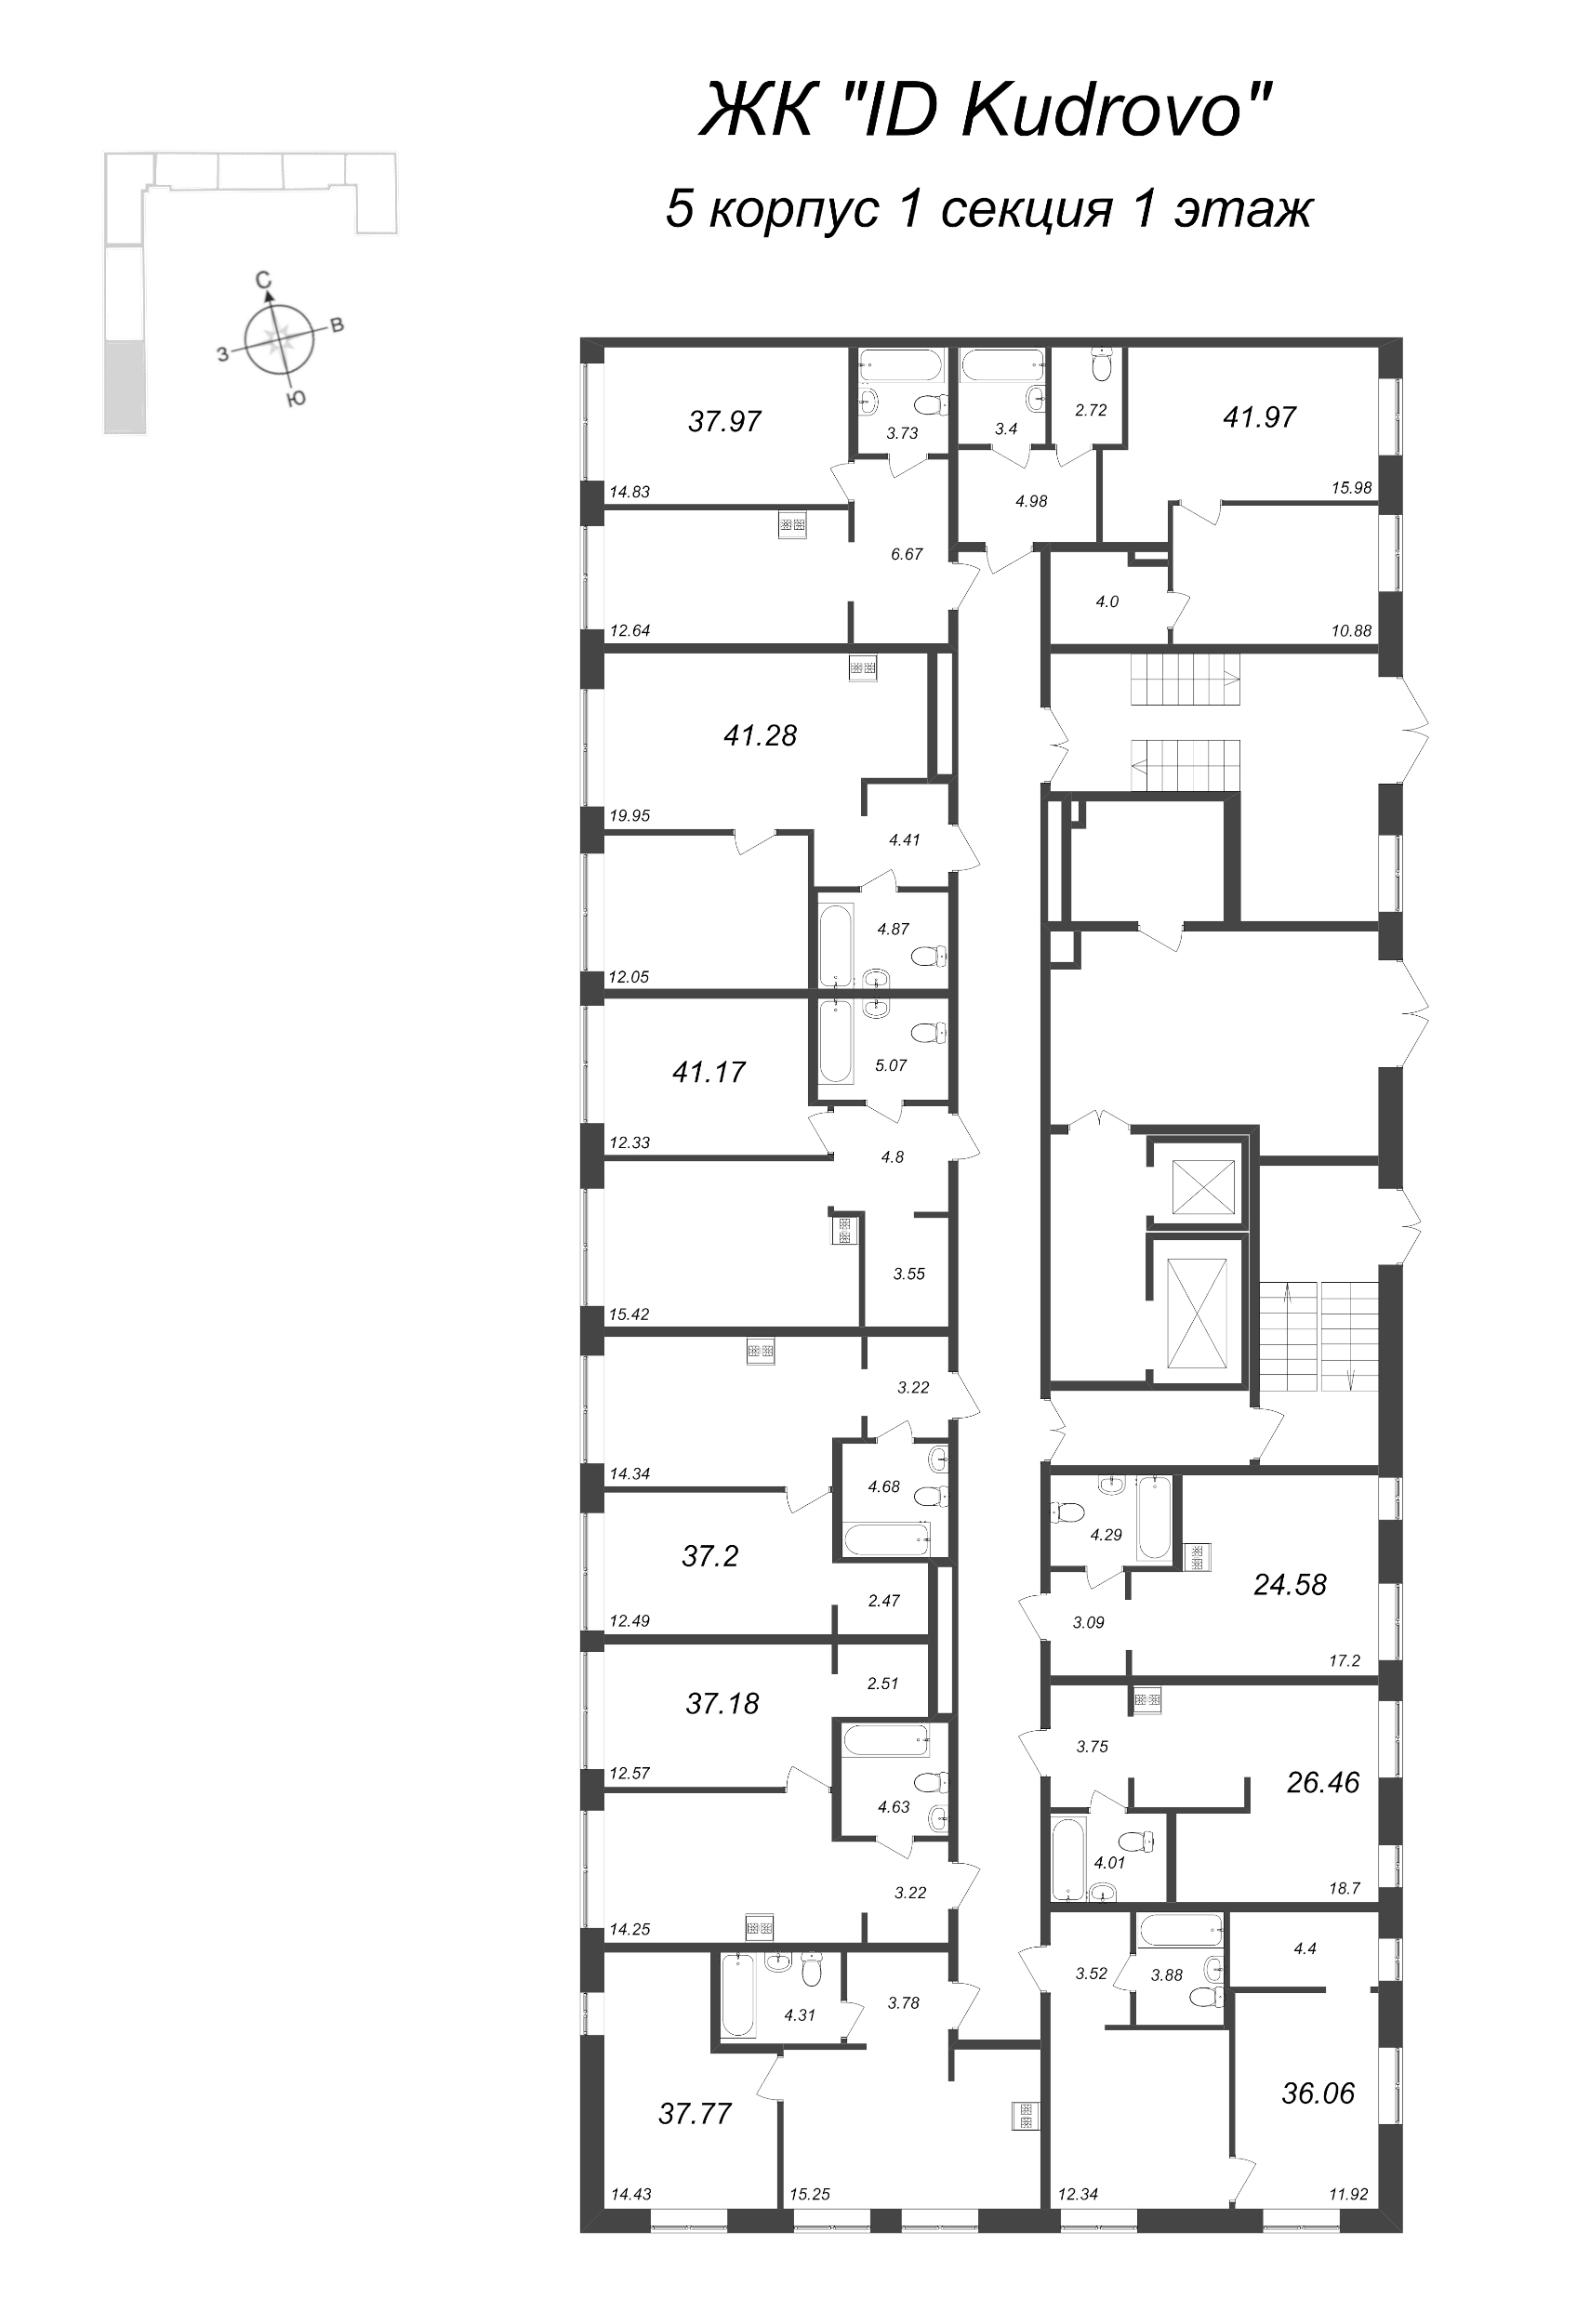 2-комнатная (Евро) квартира, 41.97 м² - планировка этажа